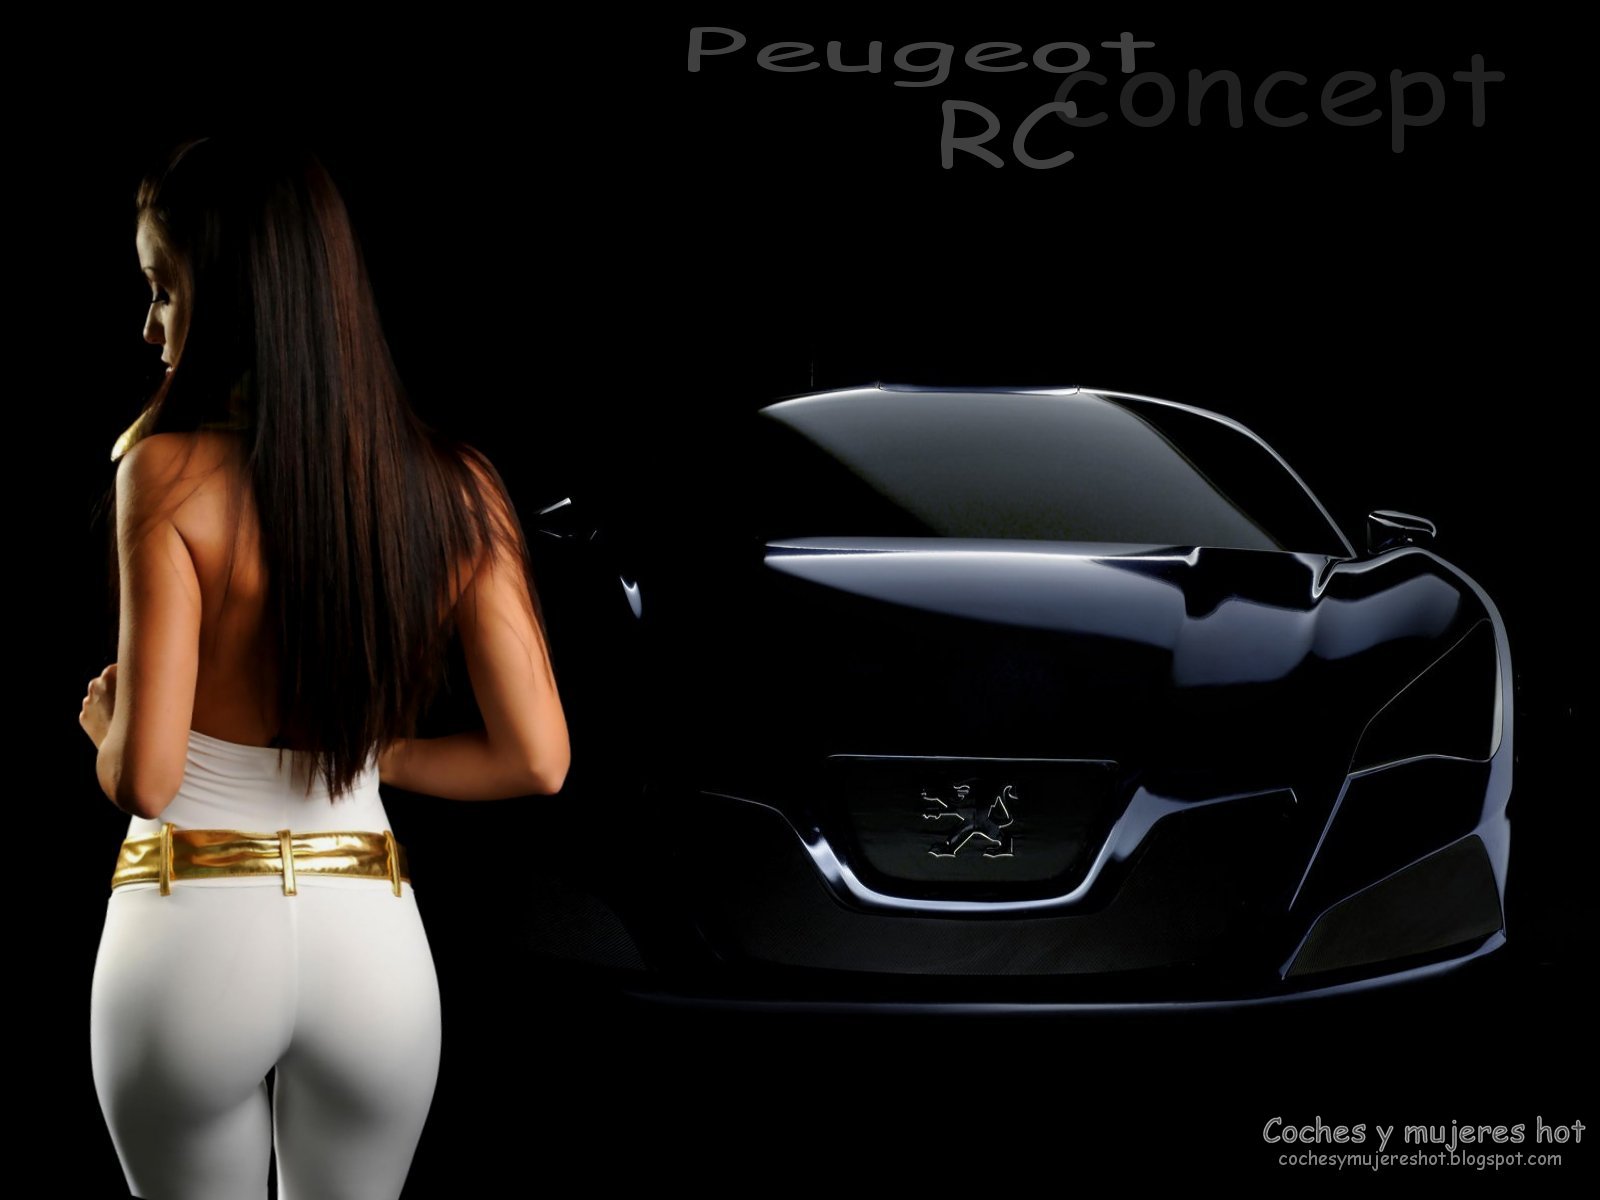 peugeot rc concept latina car hd coches mujeres carros wallpaper%2B593+%5Bc...